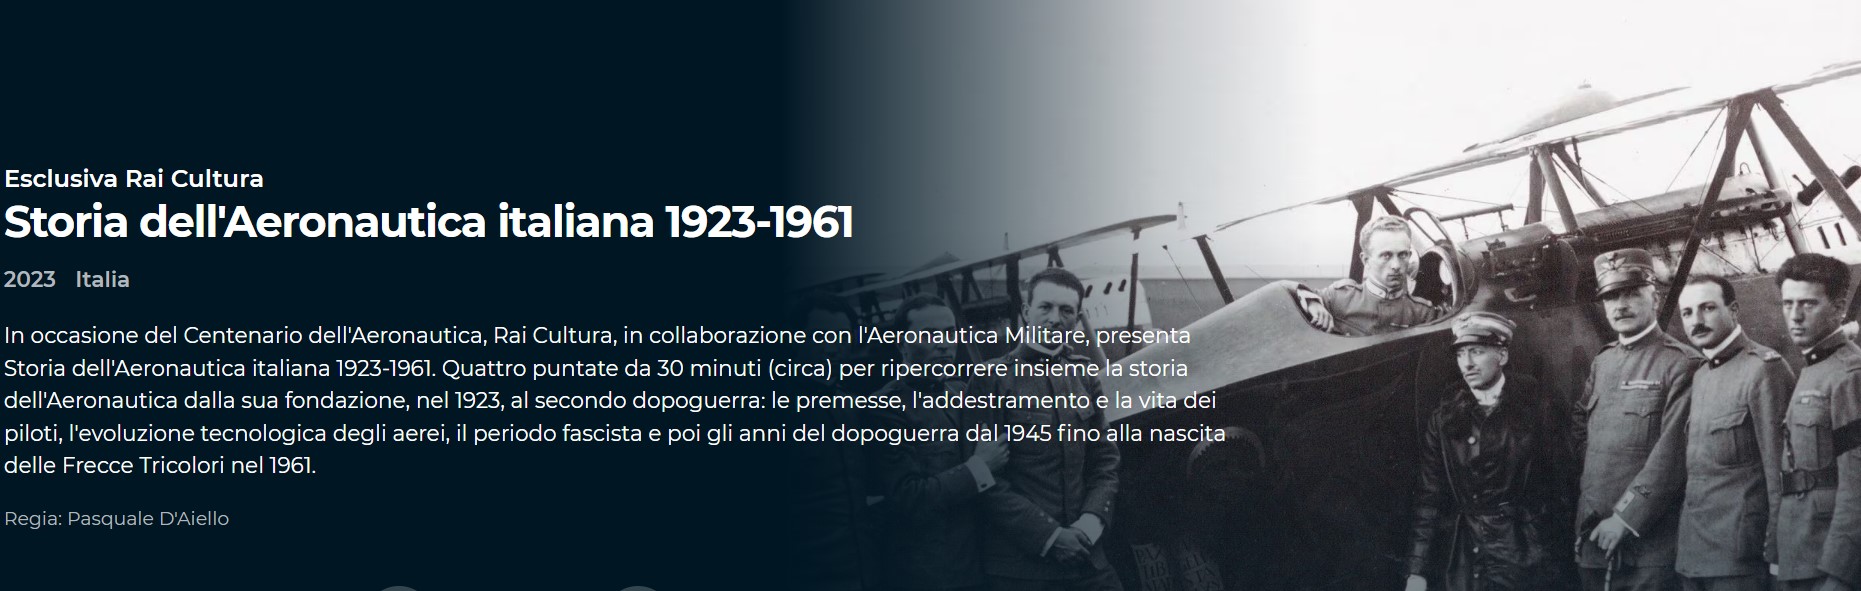 https://www.raiplay.it/programmi/storiadellaeronauticaitaliana1923-1961